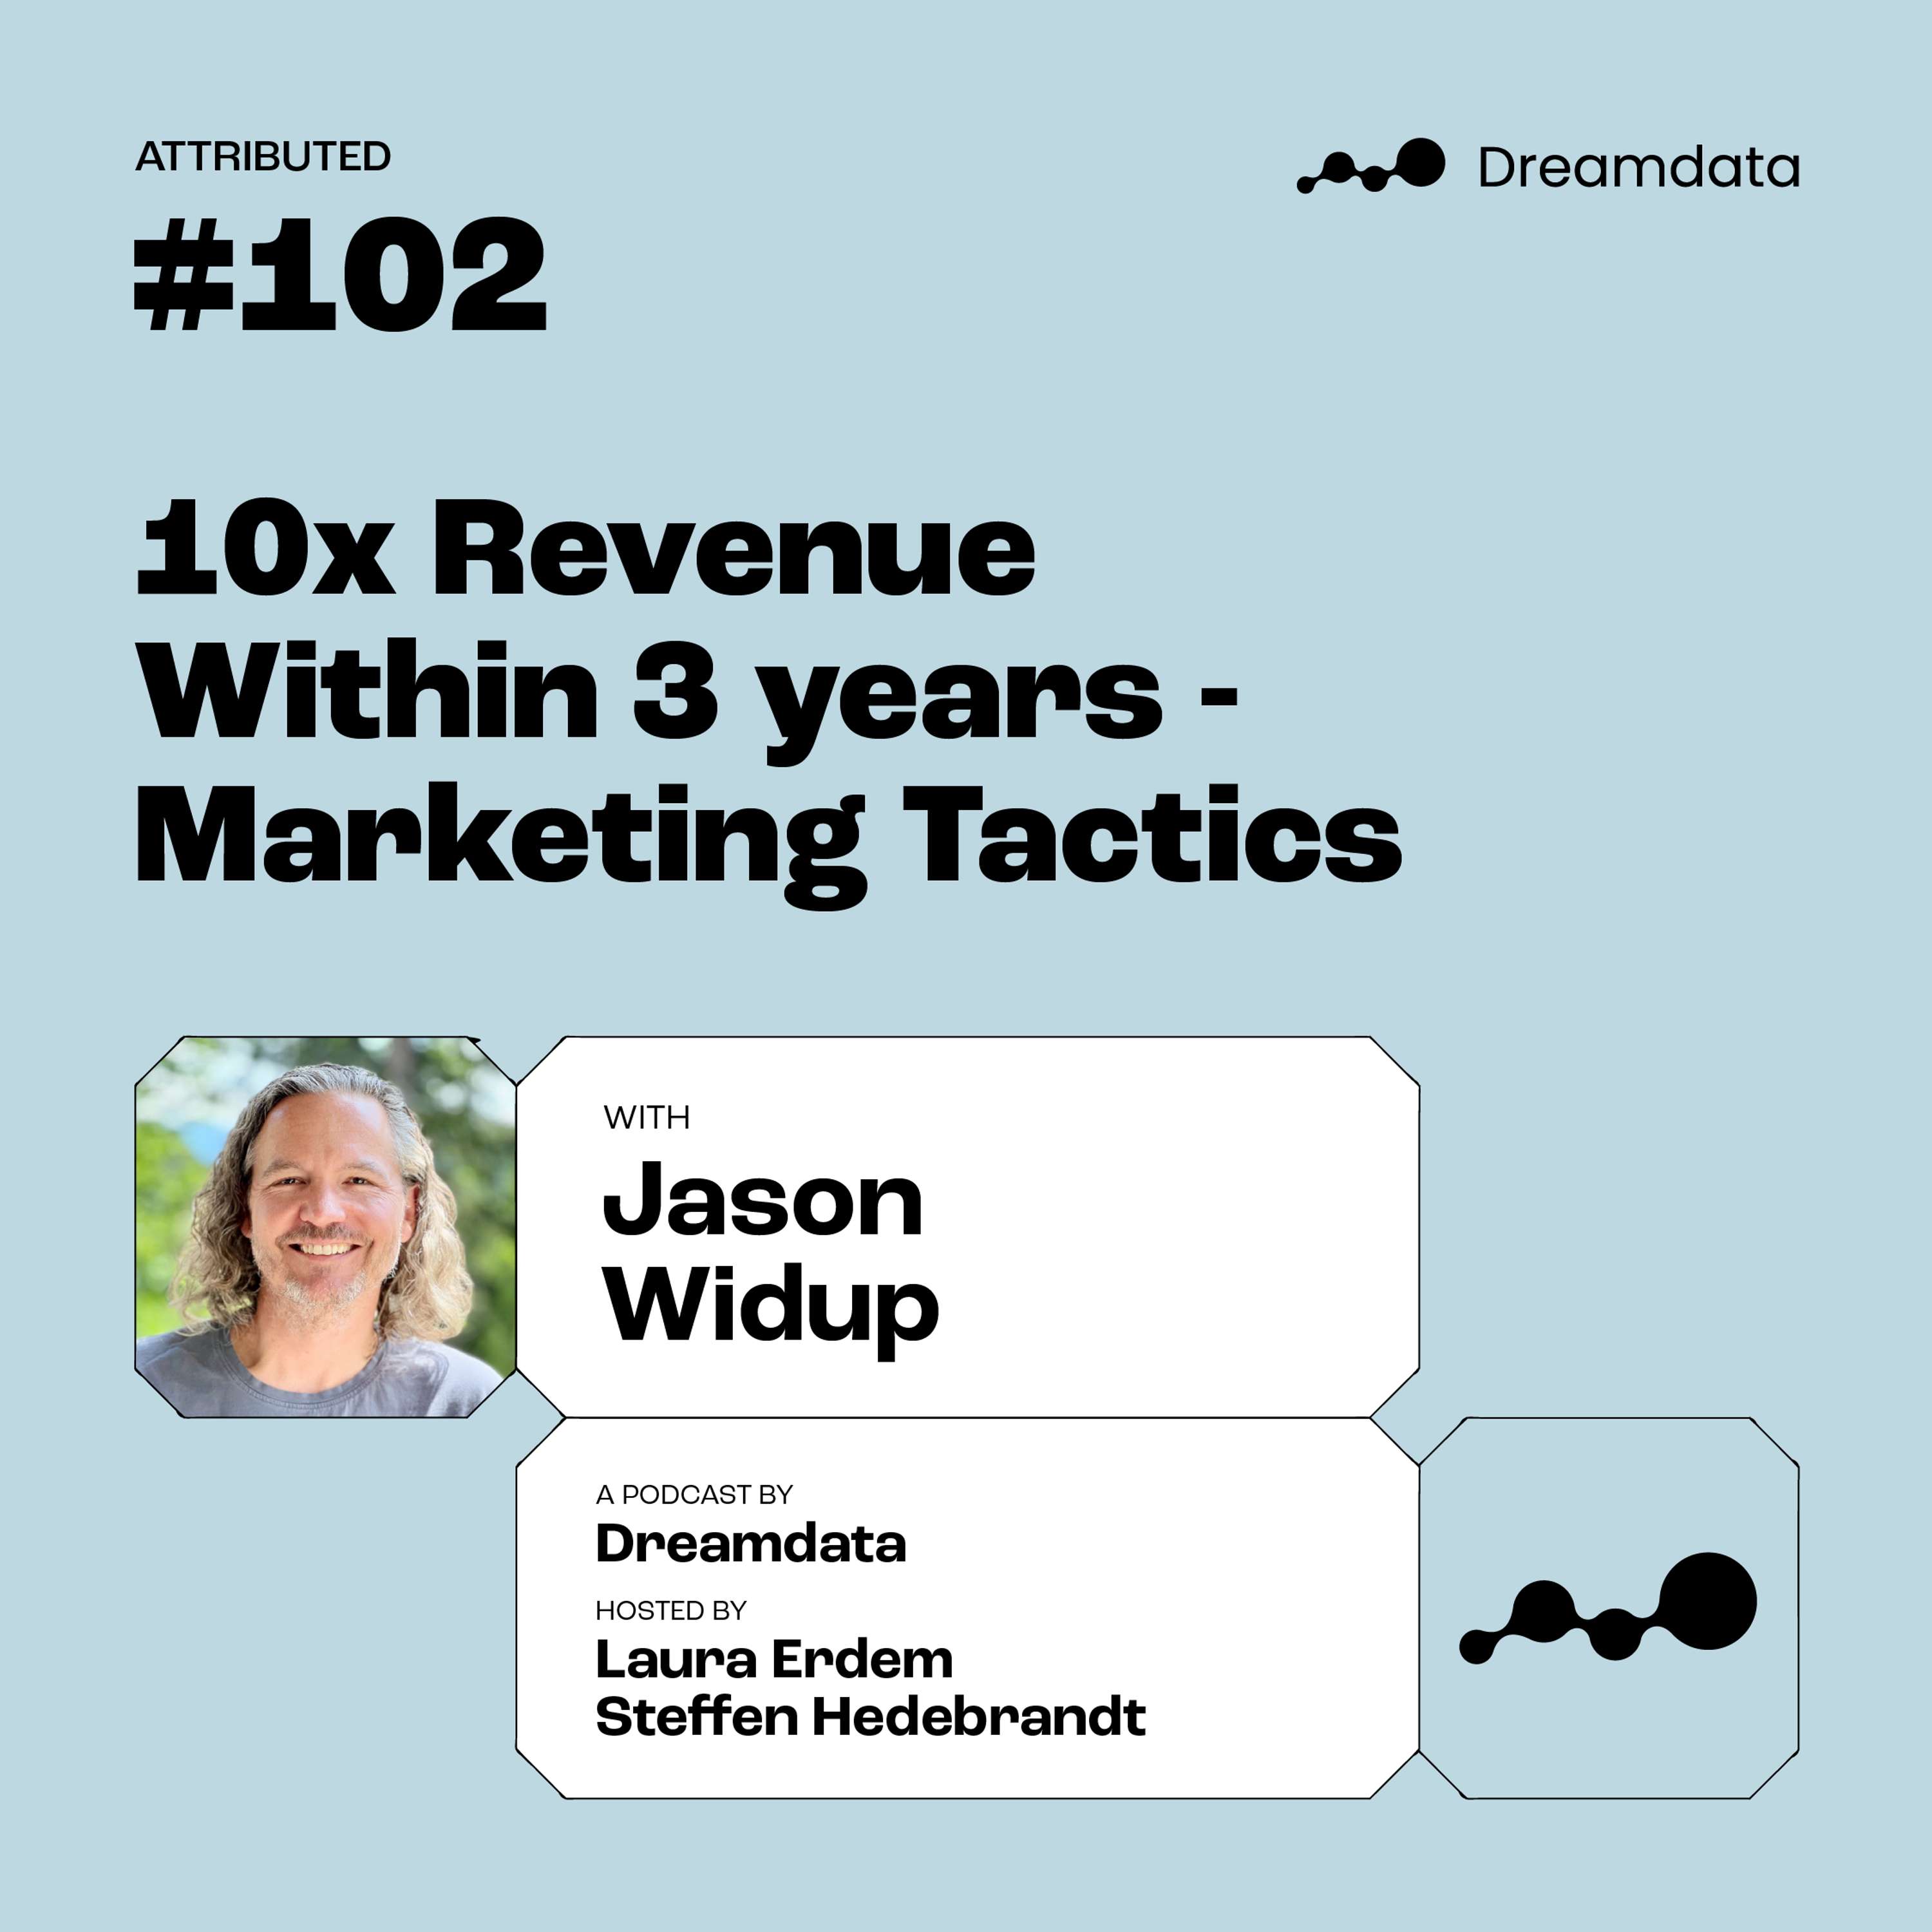 Jason Widup: 10x Revenue Within 3 years - Marketing Tactics